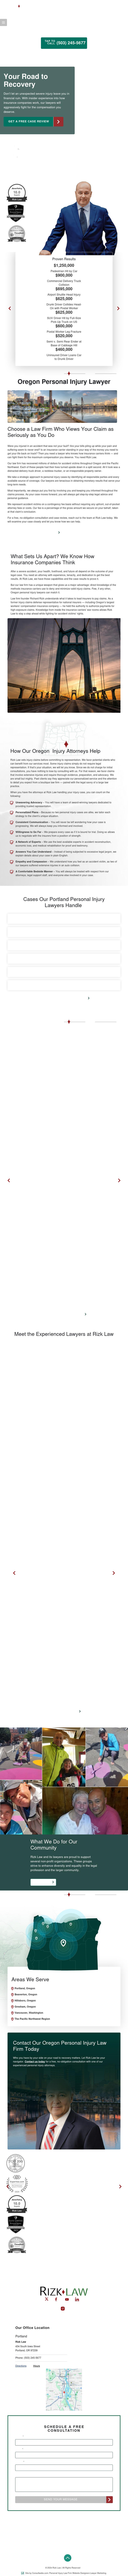 Rizk Law, Inc,: A Portland Personal Injury Firm - Portland OR Lawyers